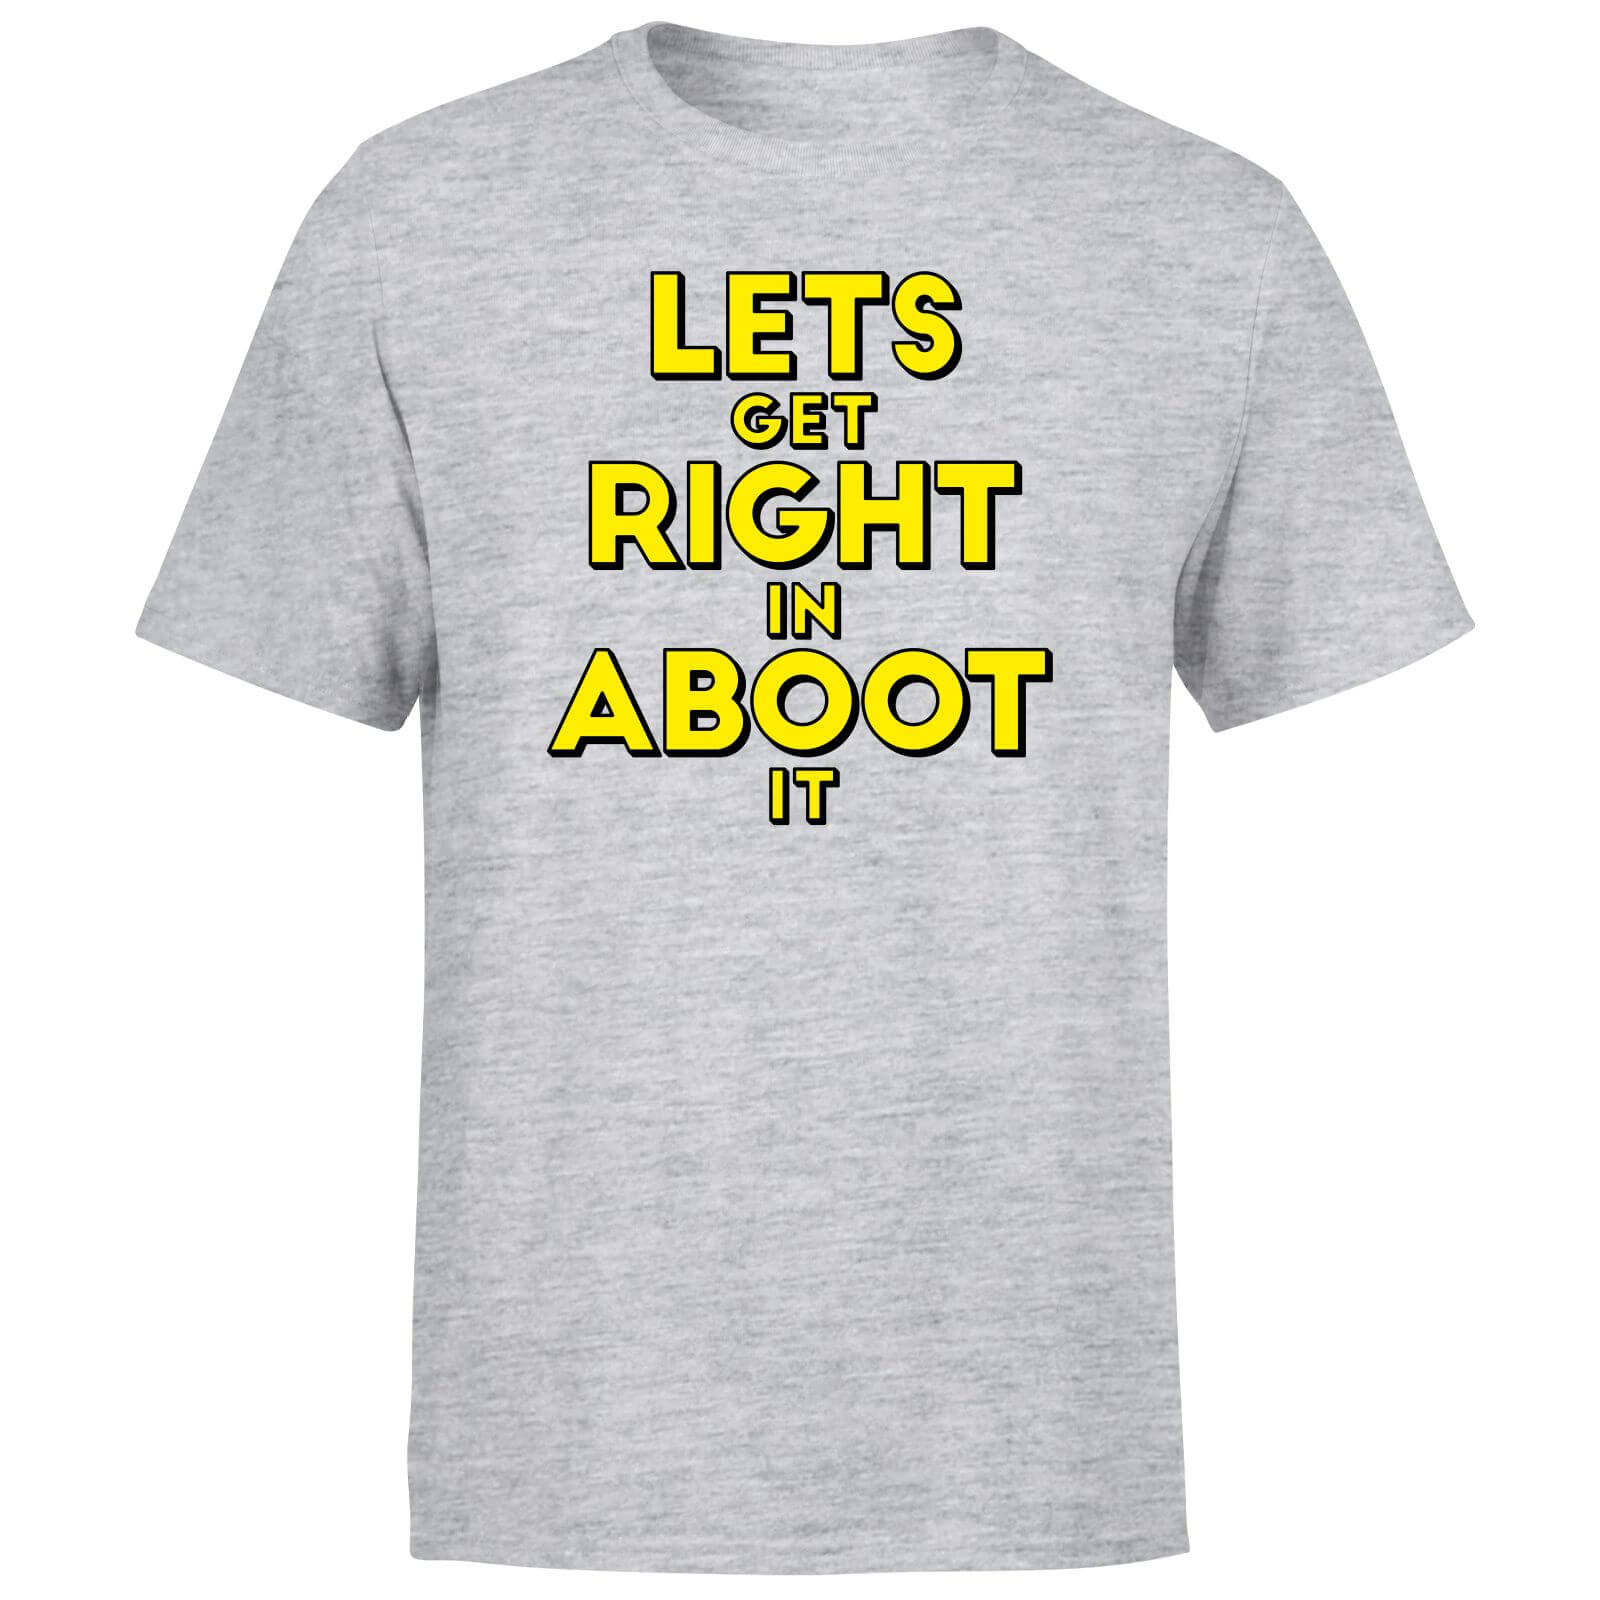 Let's Get Right In Aboot It Men's T-Shirt - Grey - 3XL - Grey